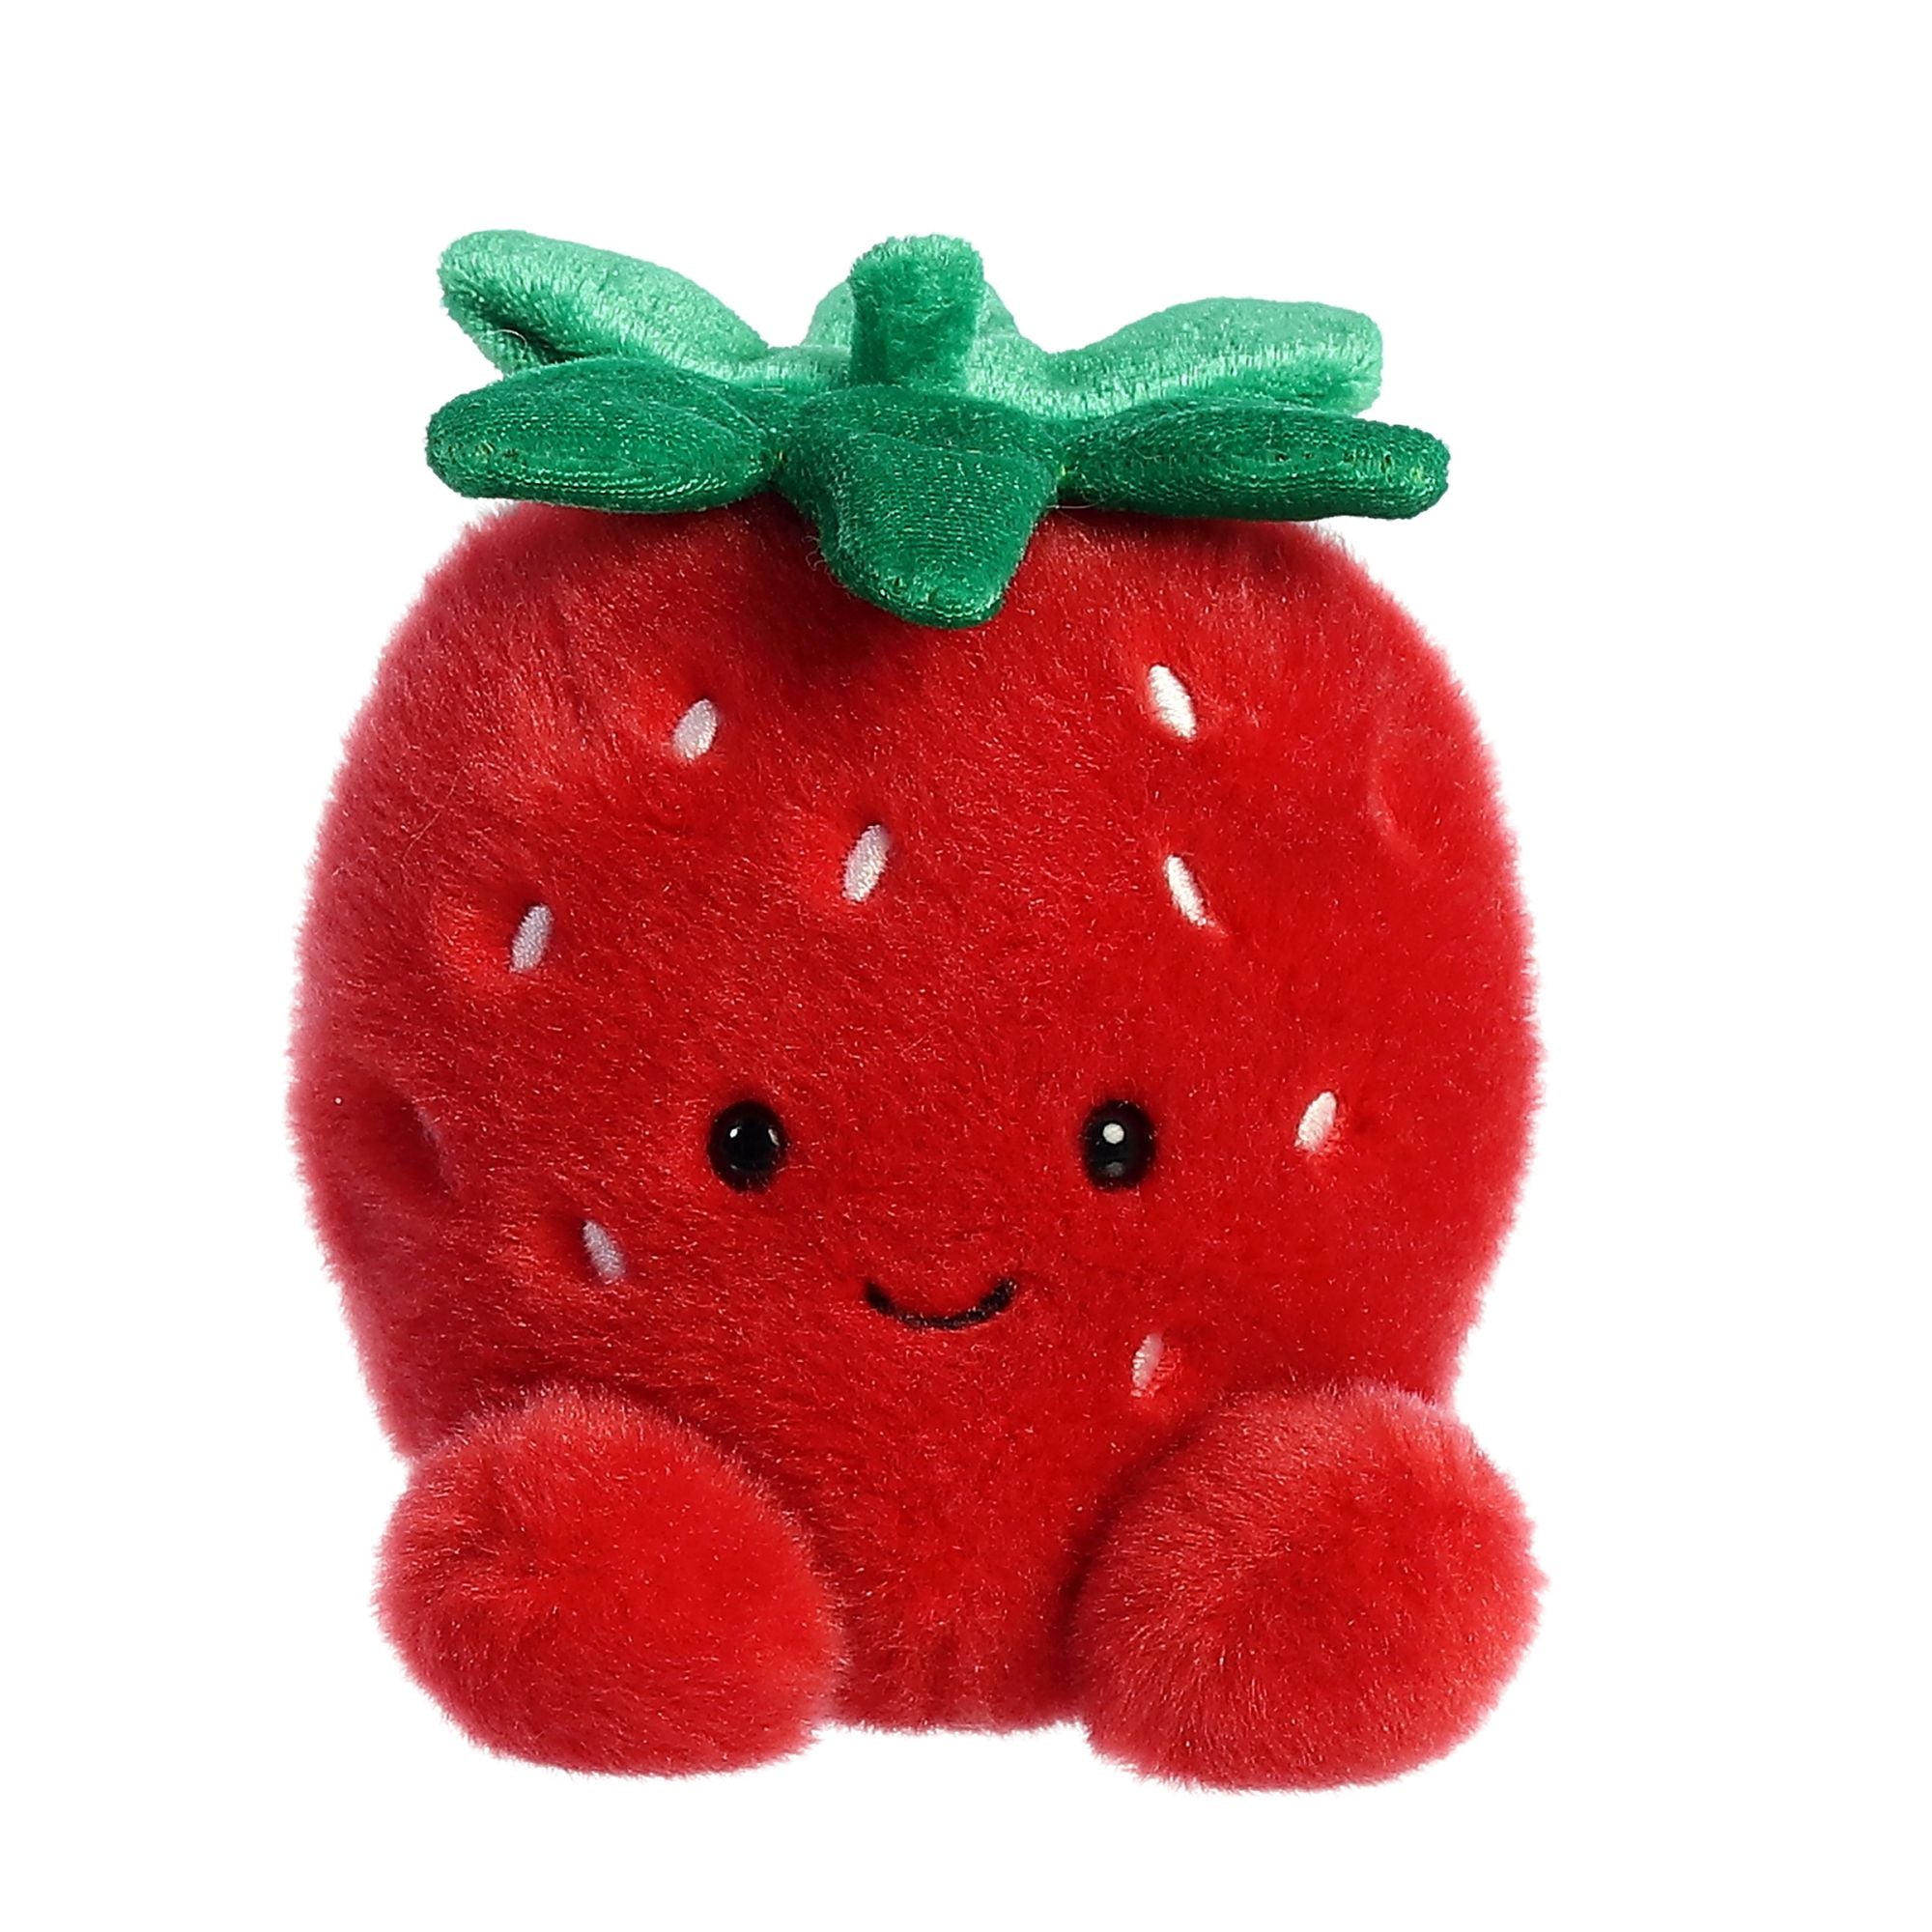 Juicy Strawberry™